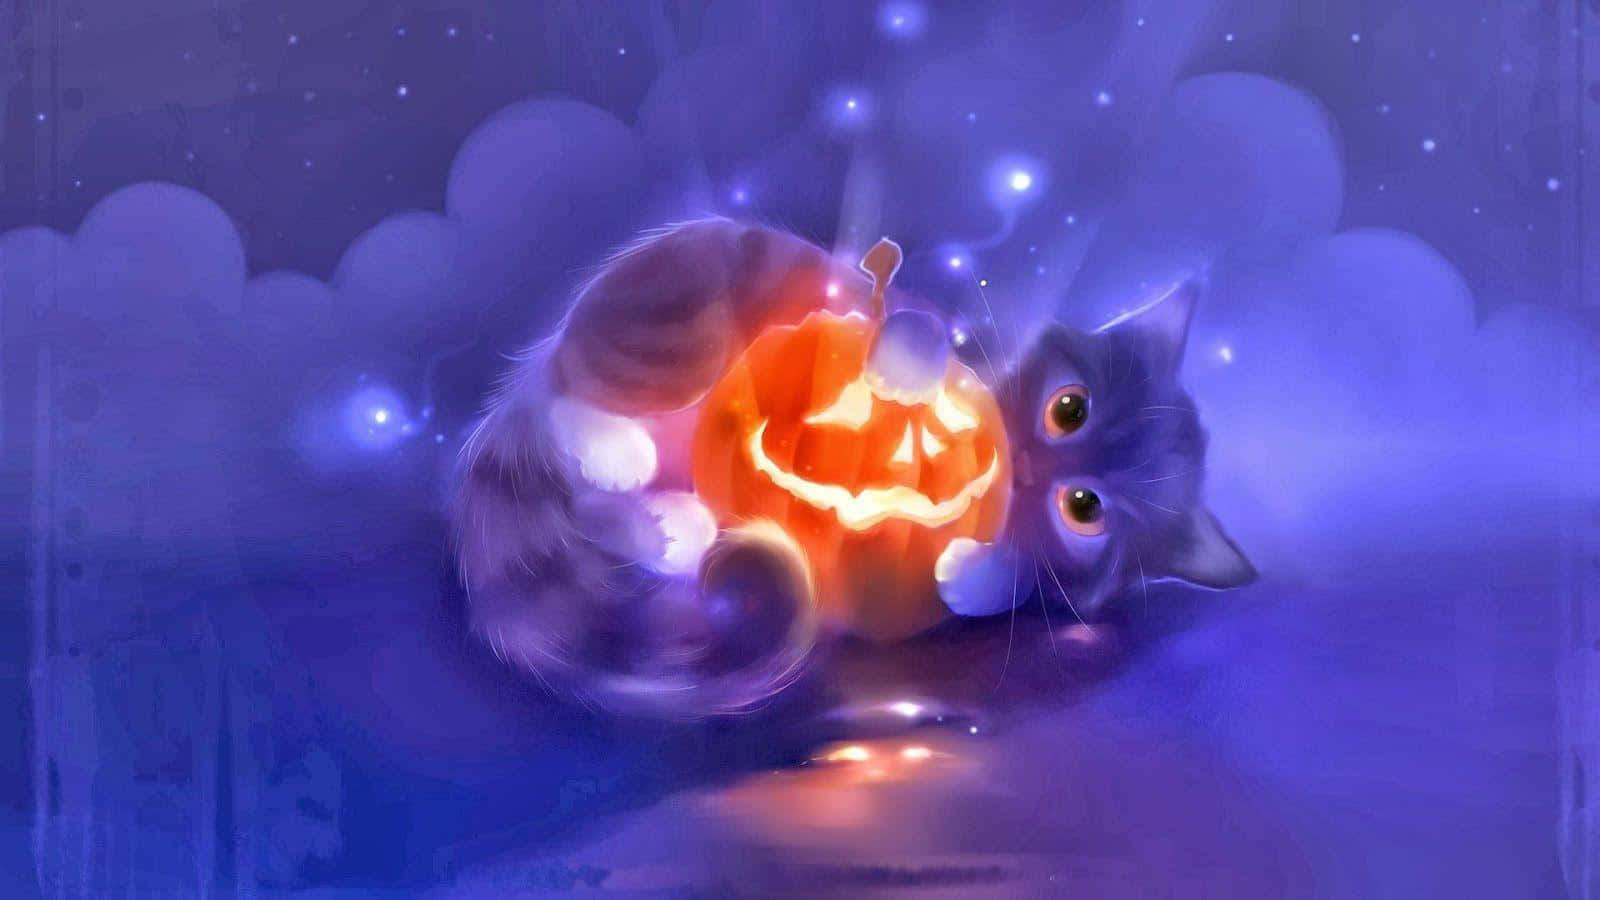 Firahalloween Med Denna Lekfulla Katt På Dator- Eller Mobilbakgrundsbilden!